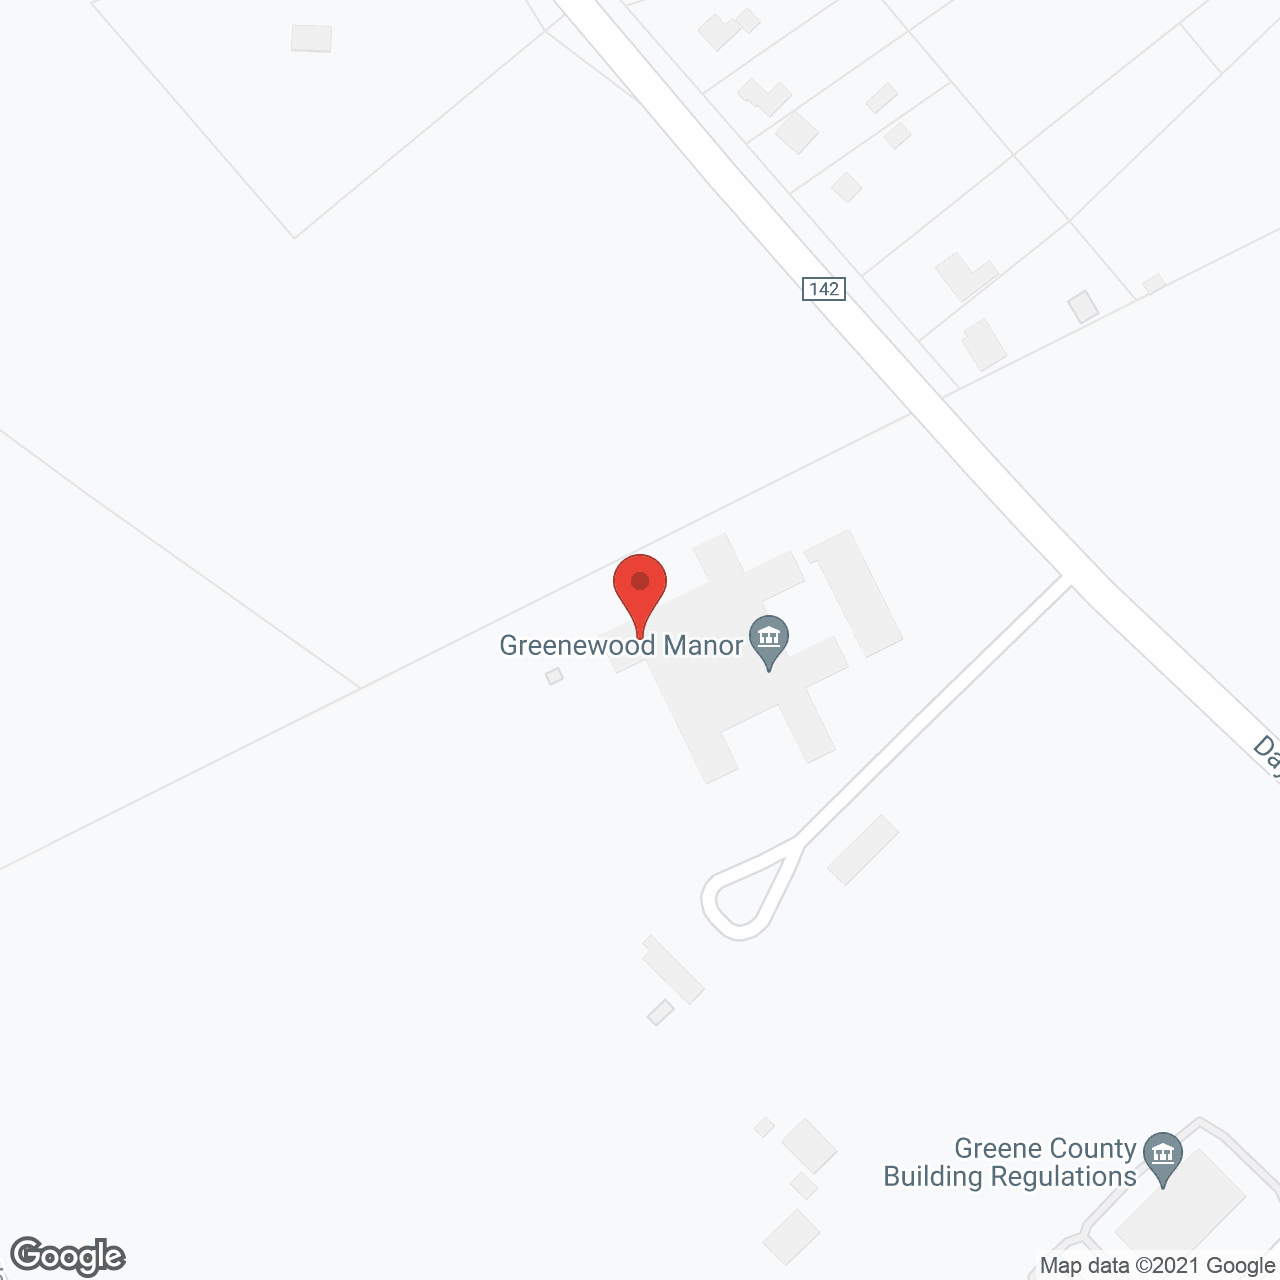 Greenewood Manor in google map